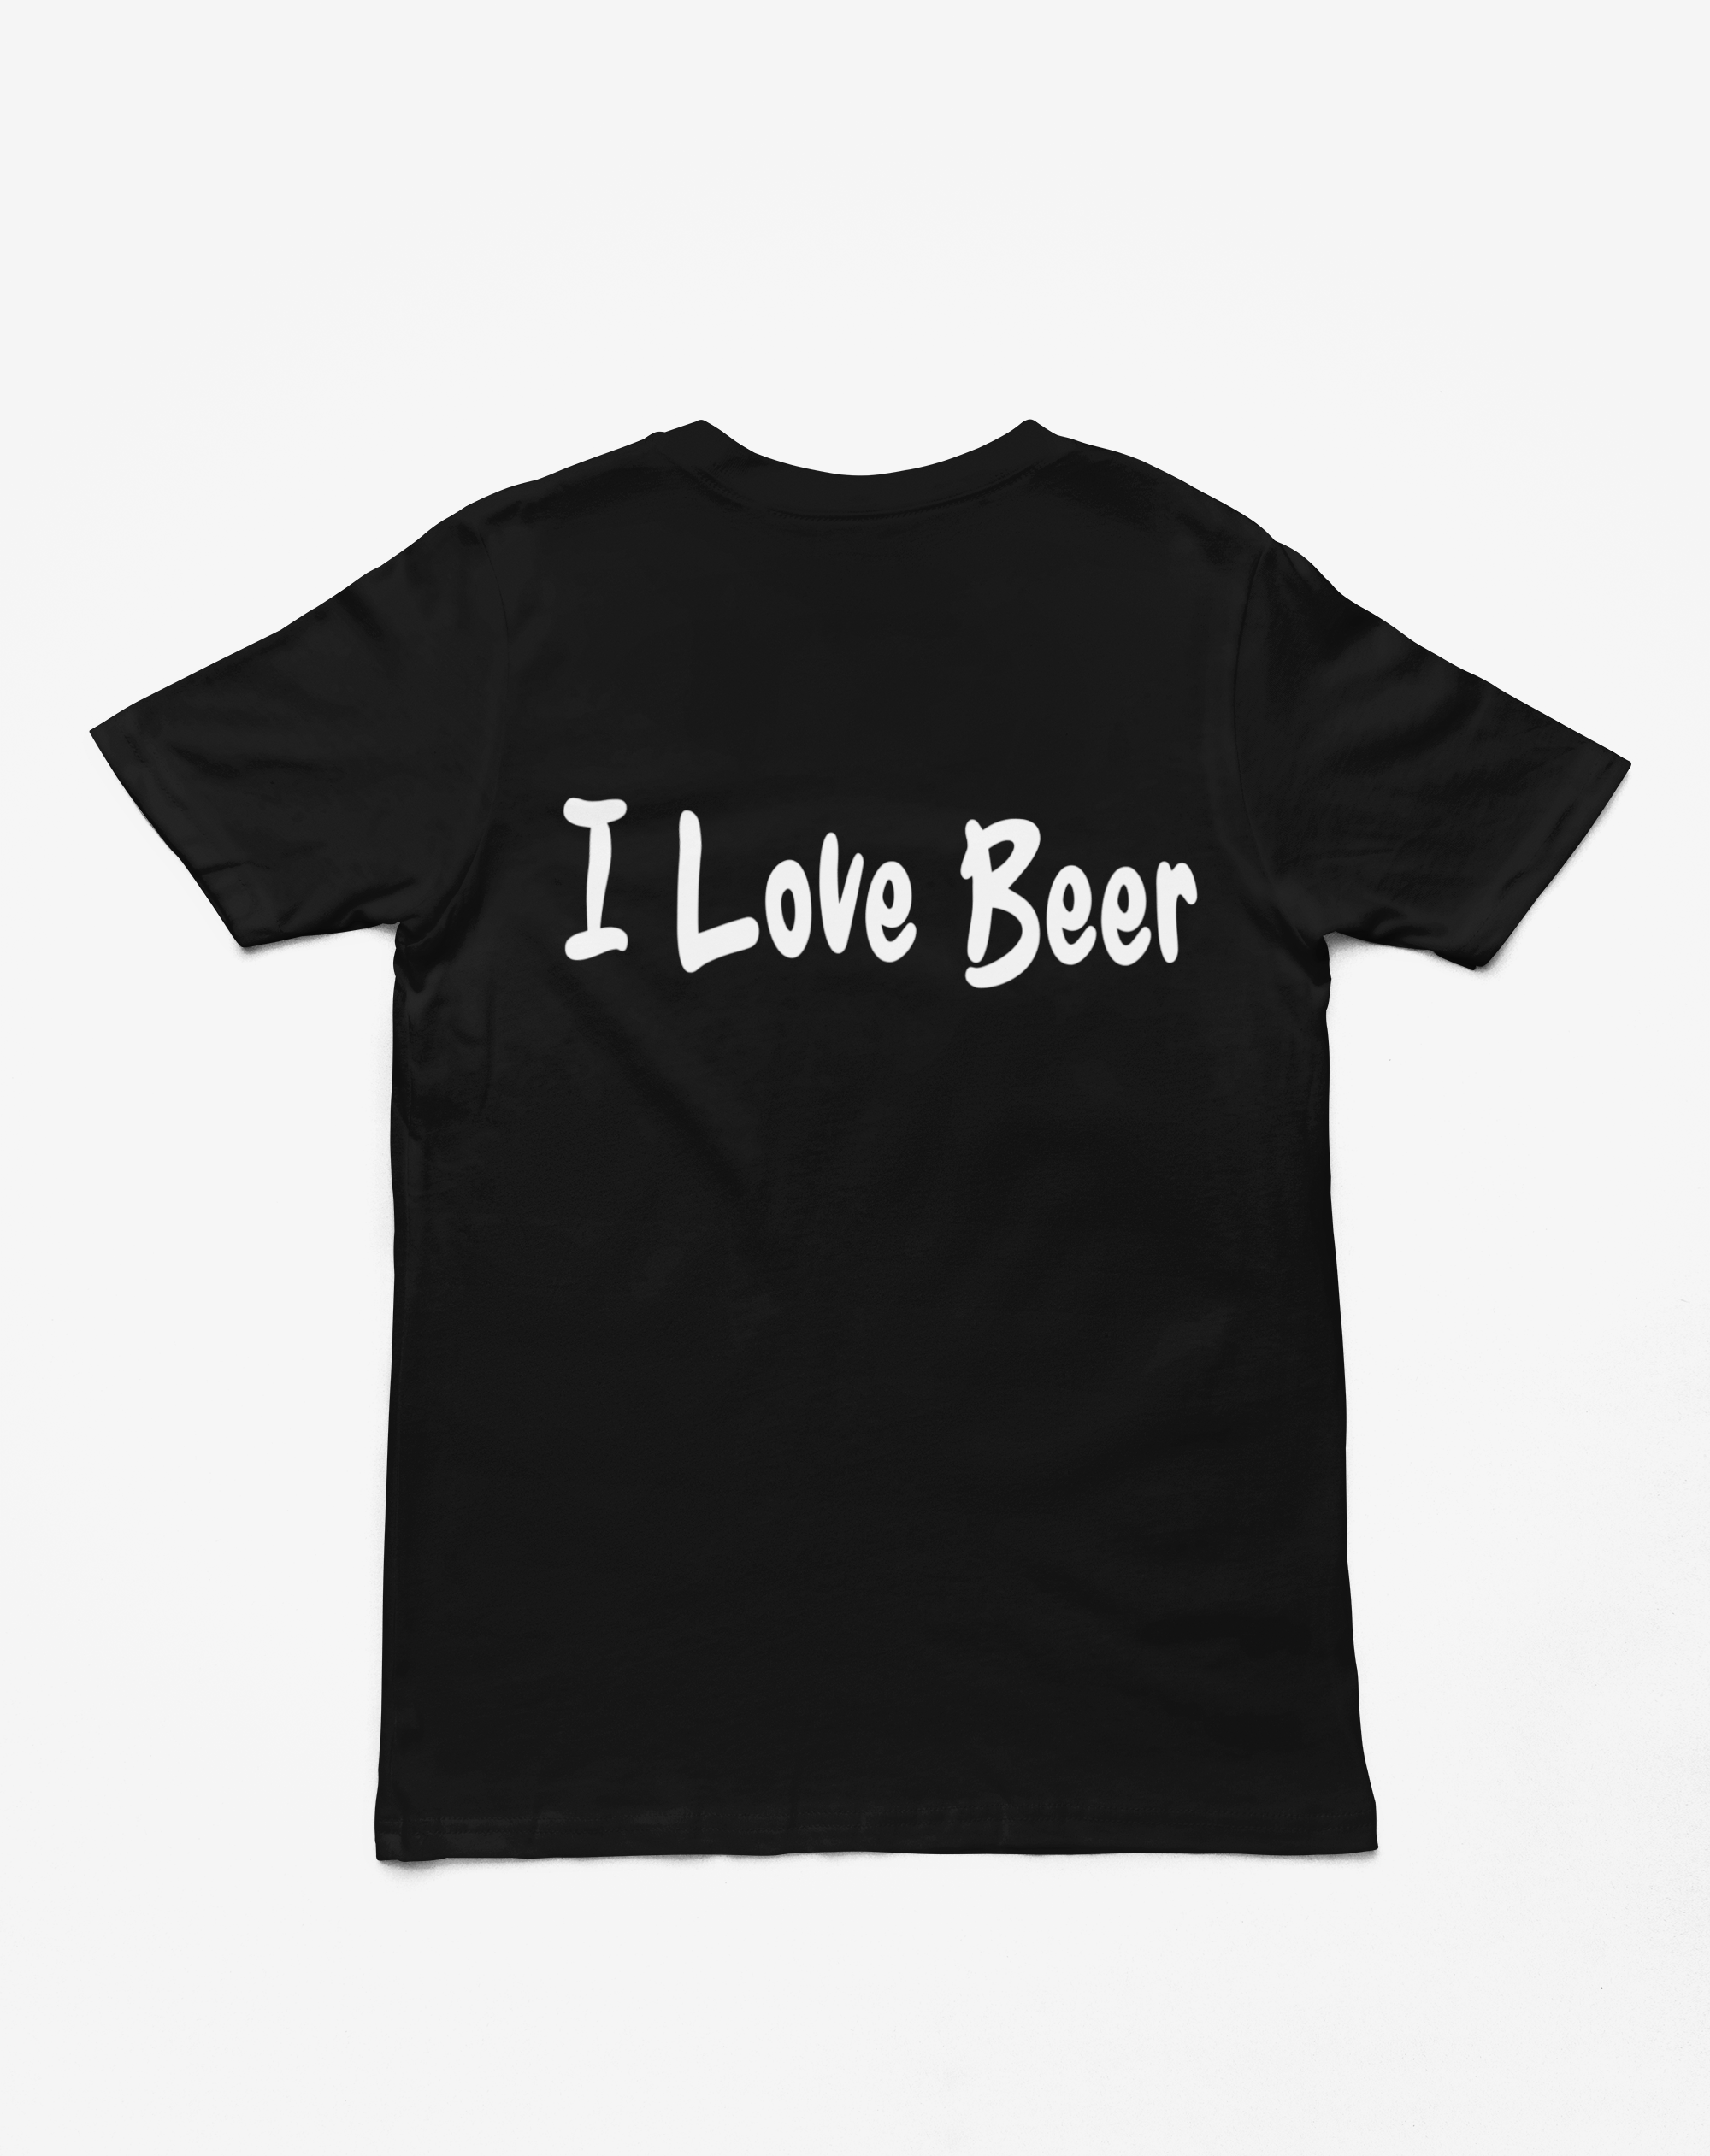 "I Love Beer" T-Shirt